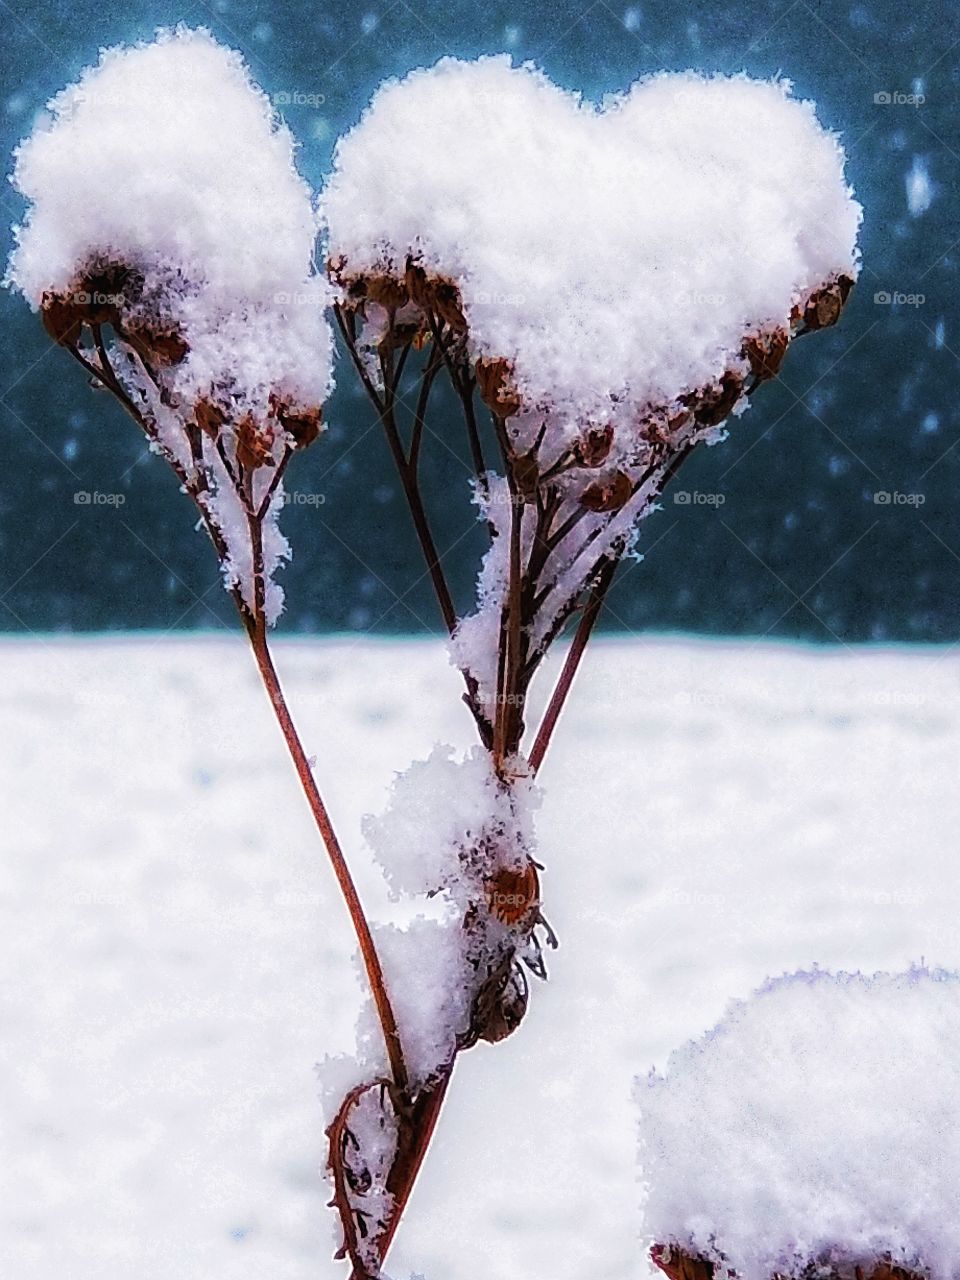 Heart of snow